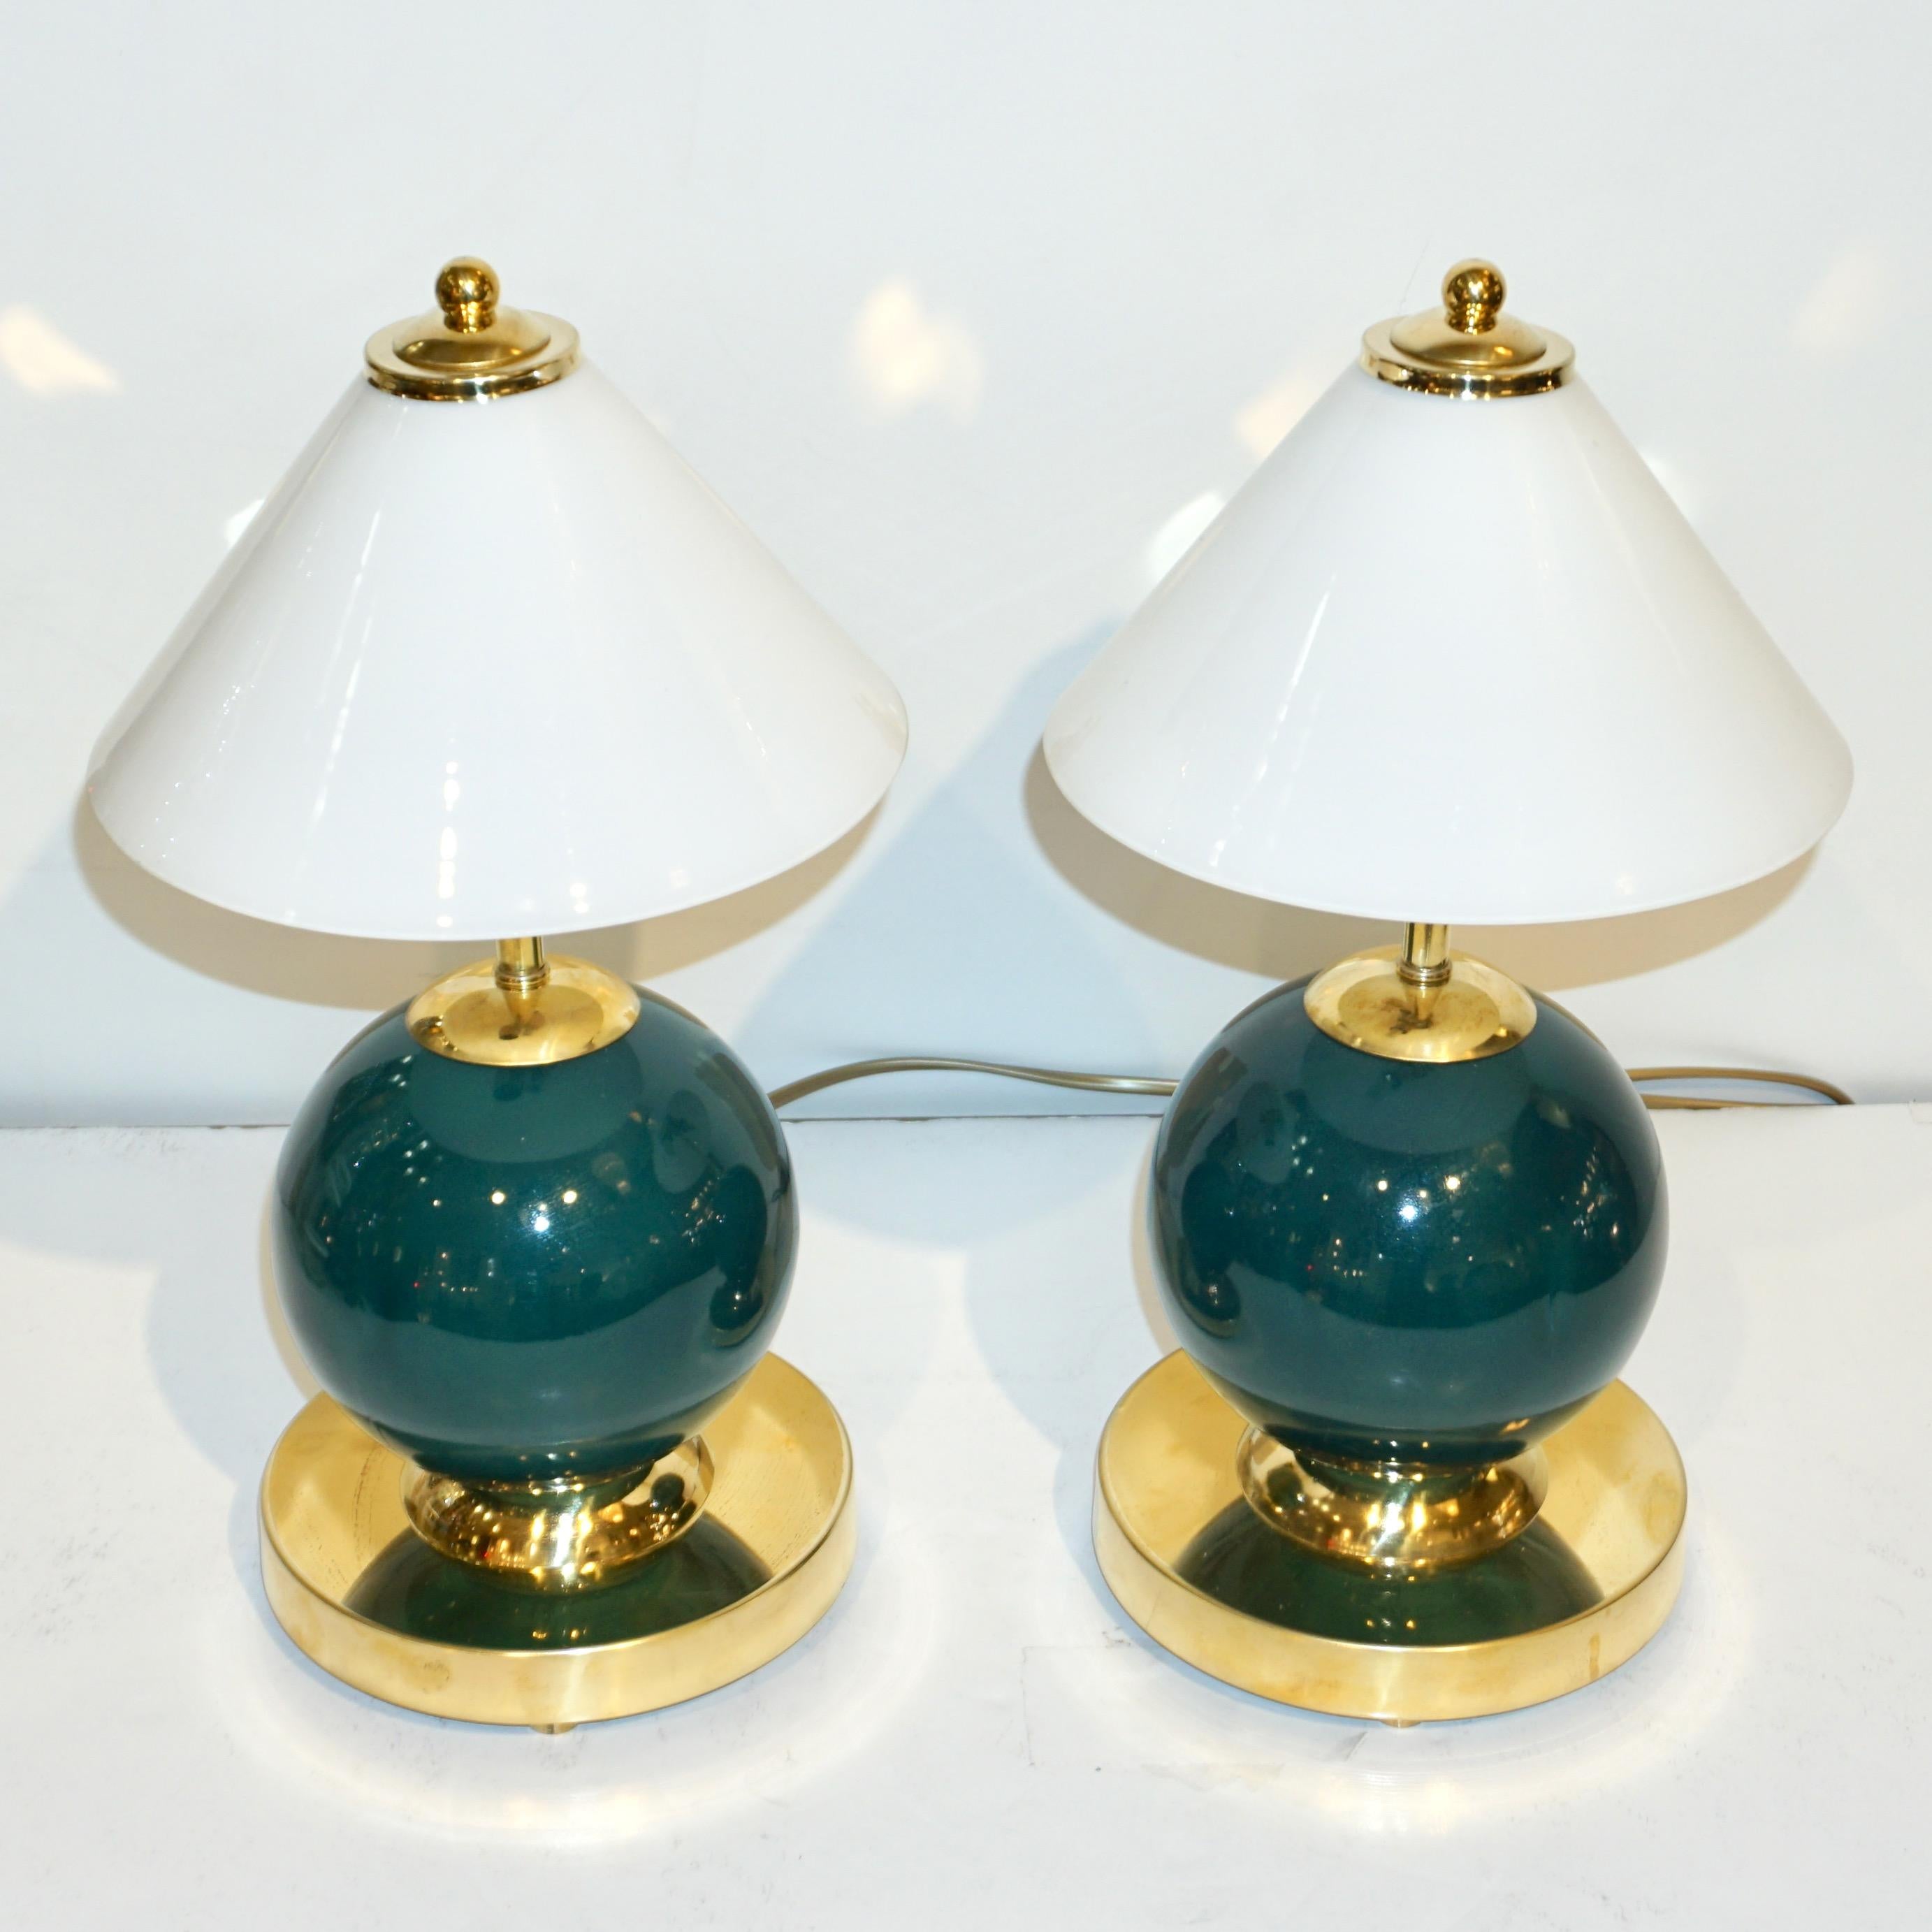 1980s Italian Vintage White & Jade Green Murano Glass Brass Desk / Table Lamps 1